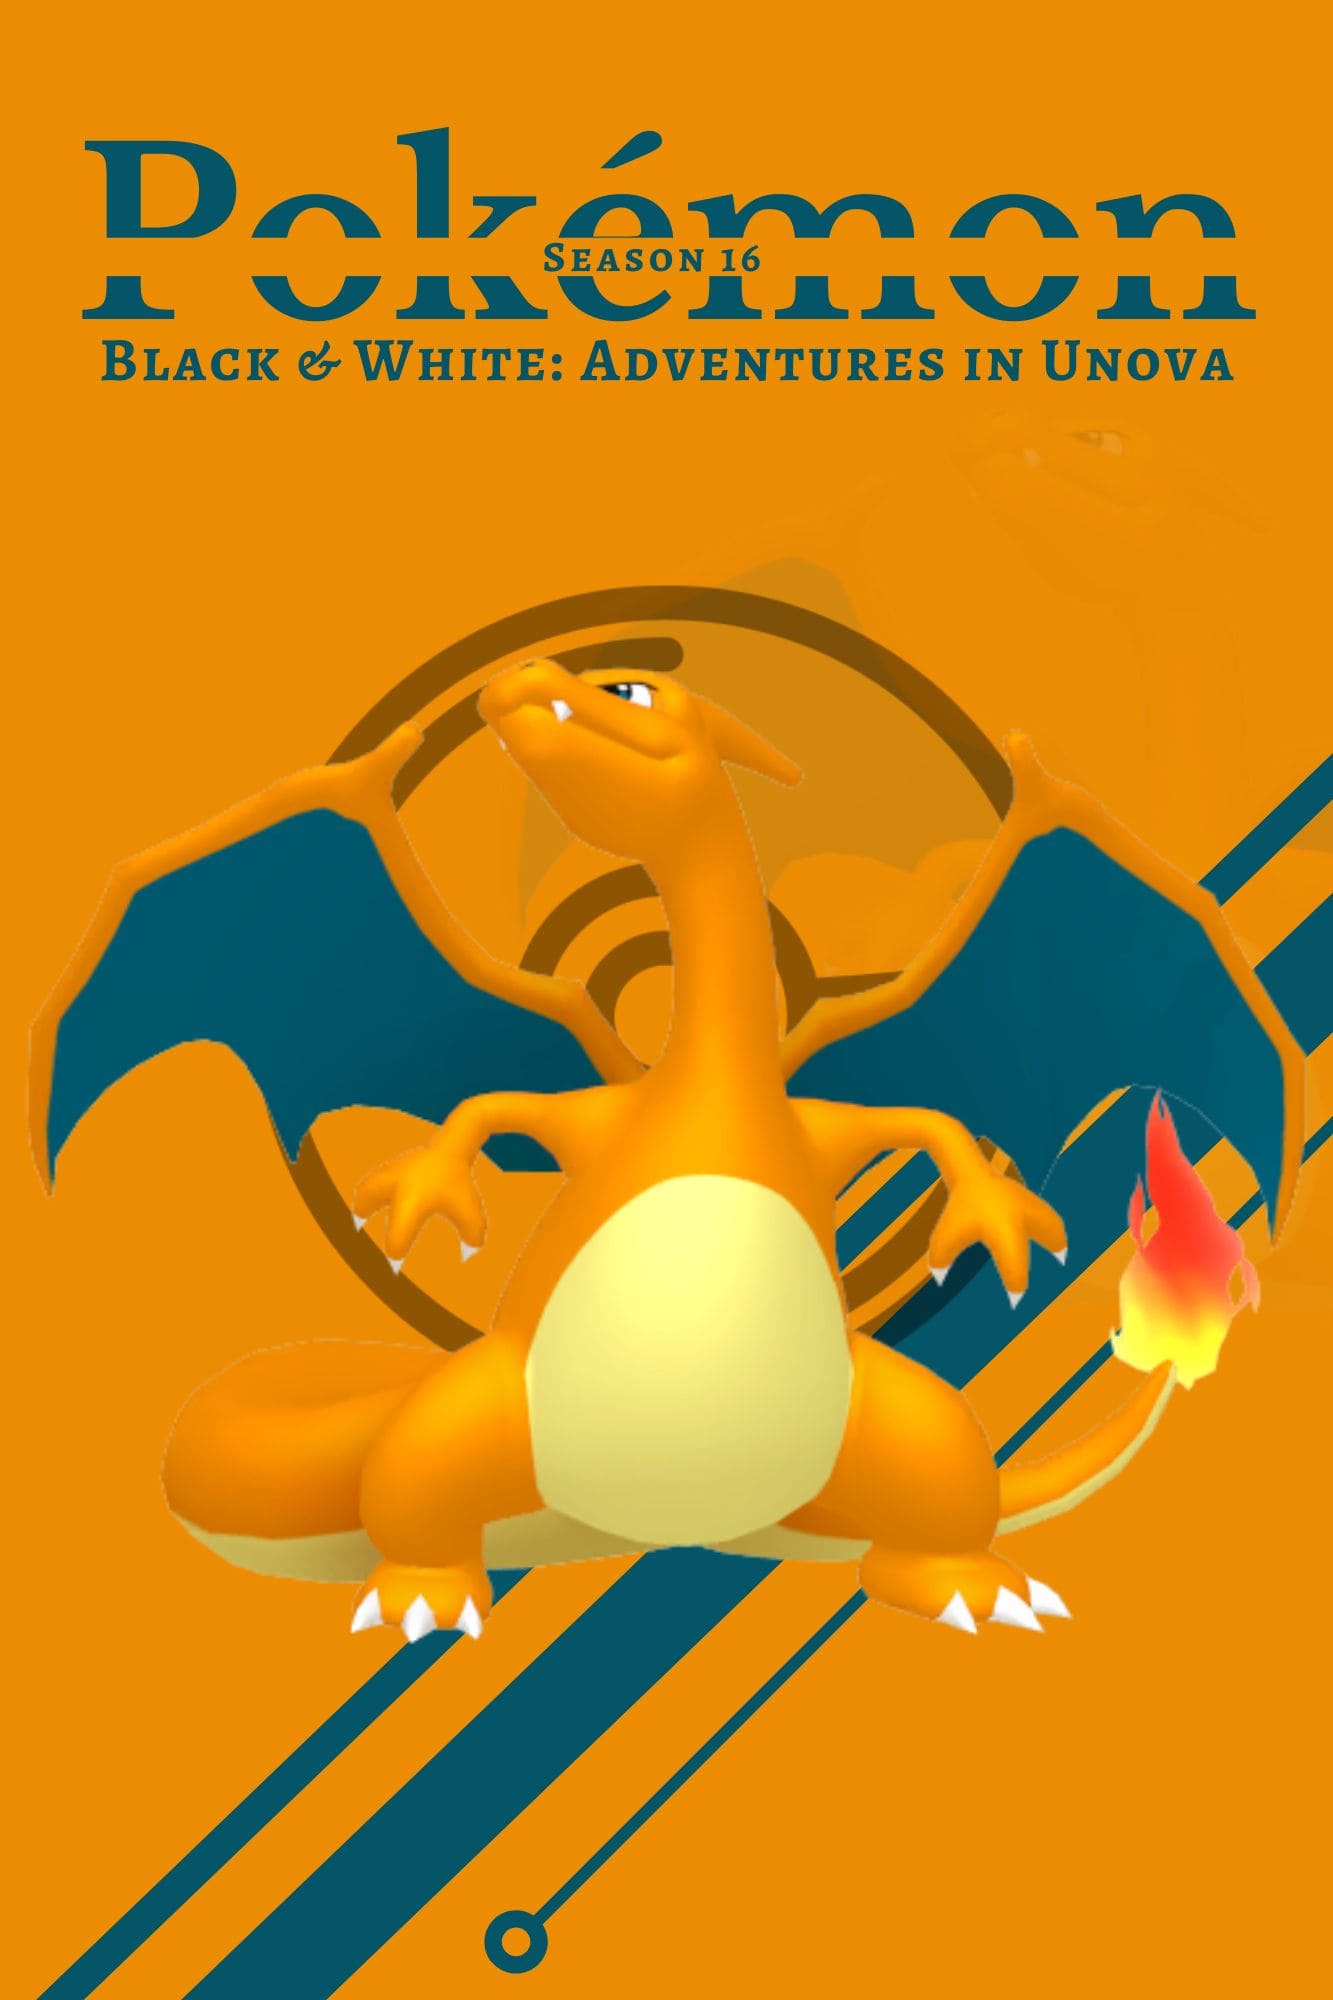 Pokémon: BW Adventures in Unova and Beyond